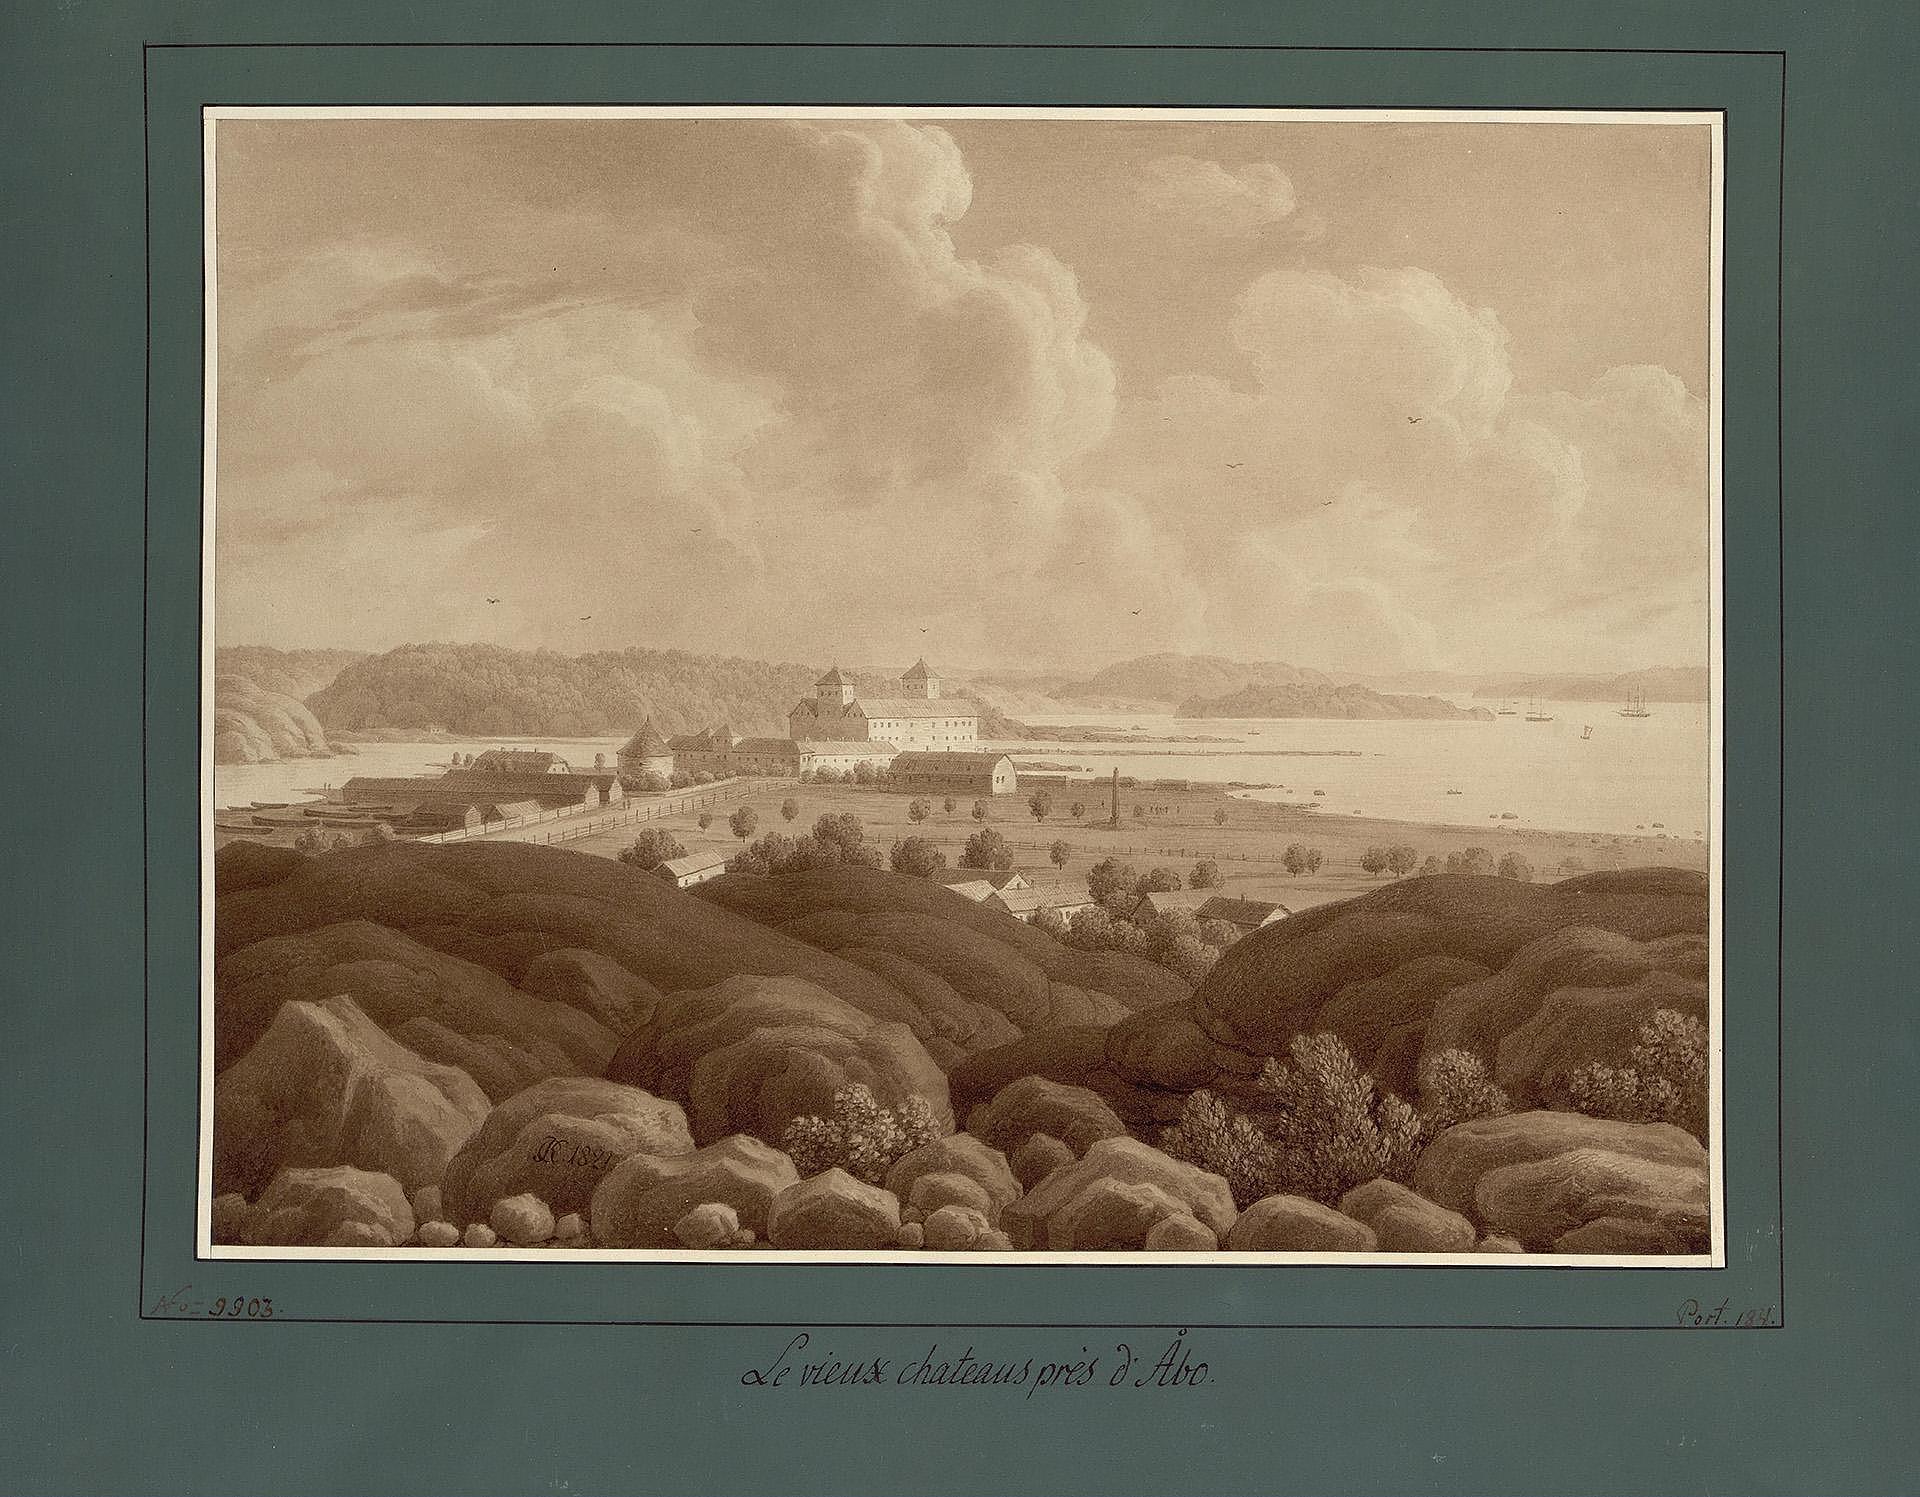 Карл Фердинанд фон Кюгельген. "Вид на старый замок в Або". 1821. Эрмитаж, Санкт-Петербург.